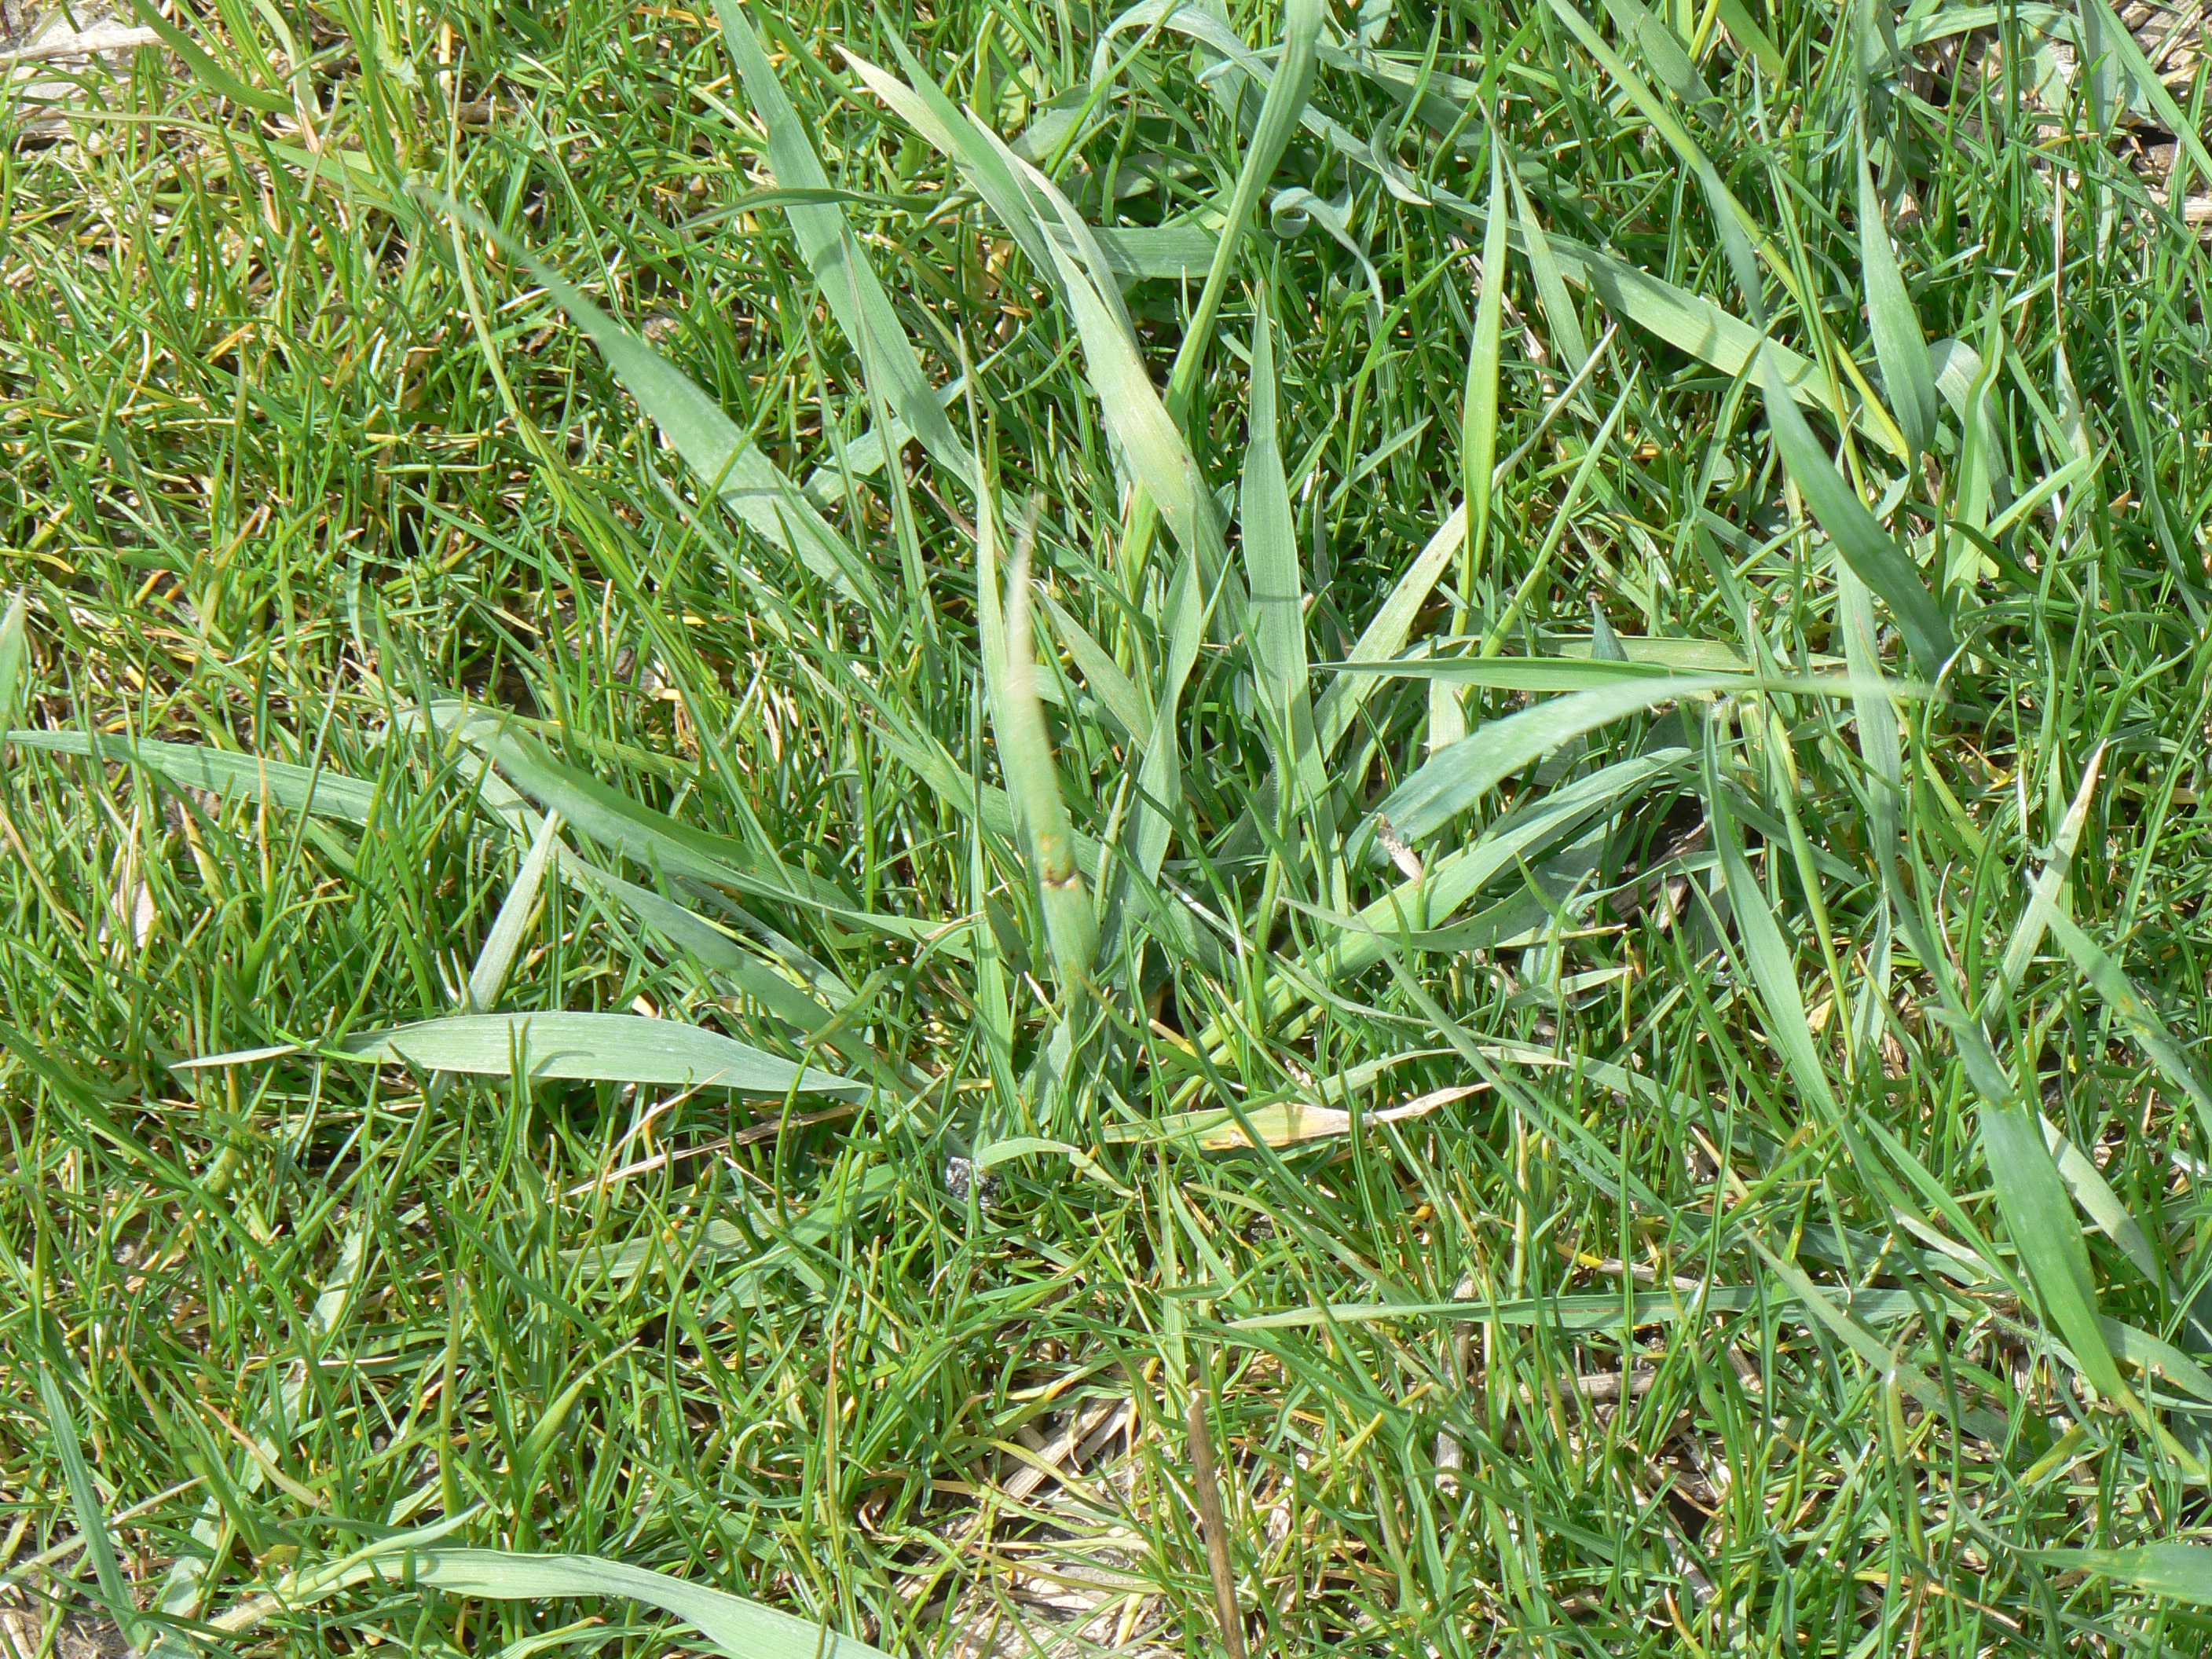 Quack grass in buffalo lawn